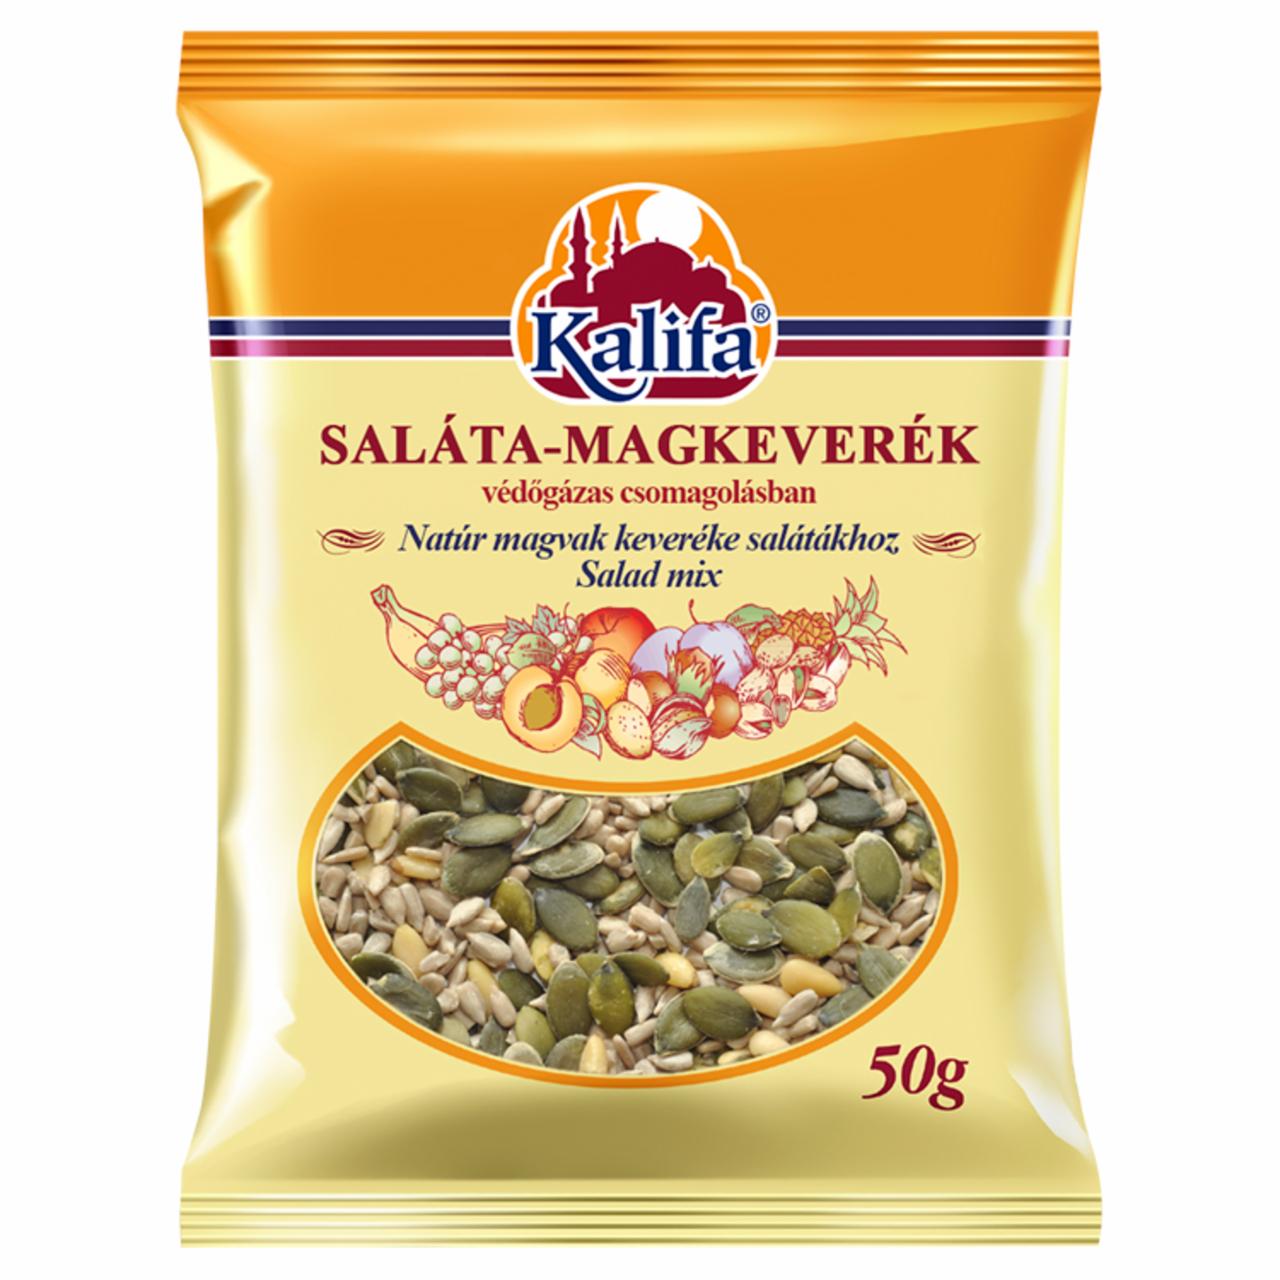 Képek - Kalifa saláta-magkeverék 50 g